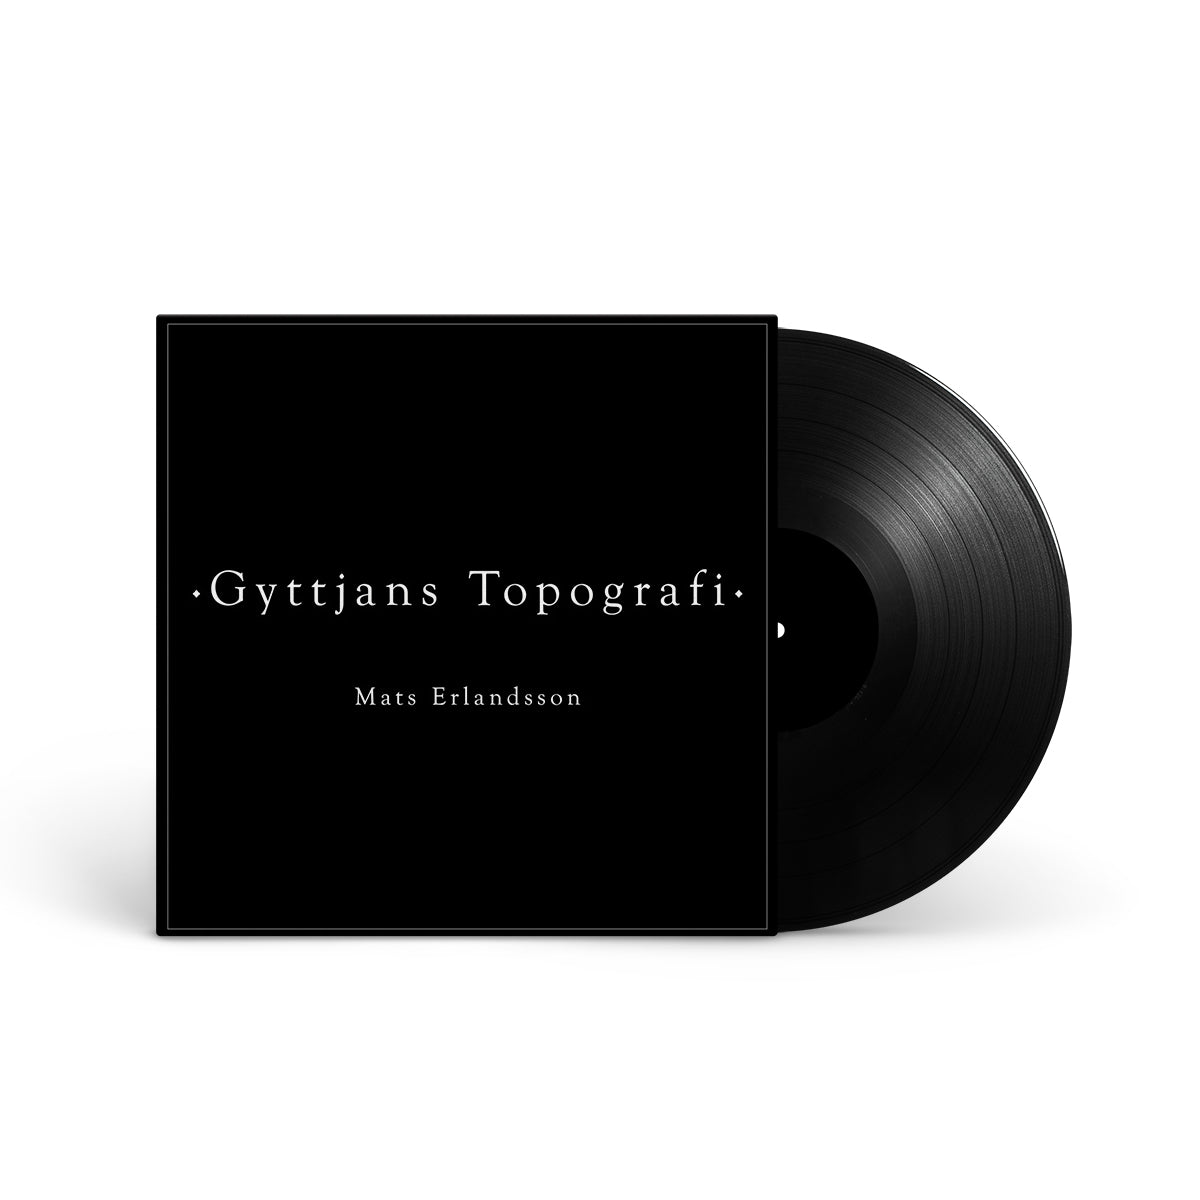 MATS ERLANDSSON "Gyttjans Topografi" LP